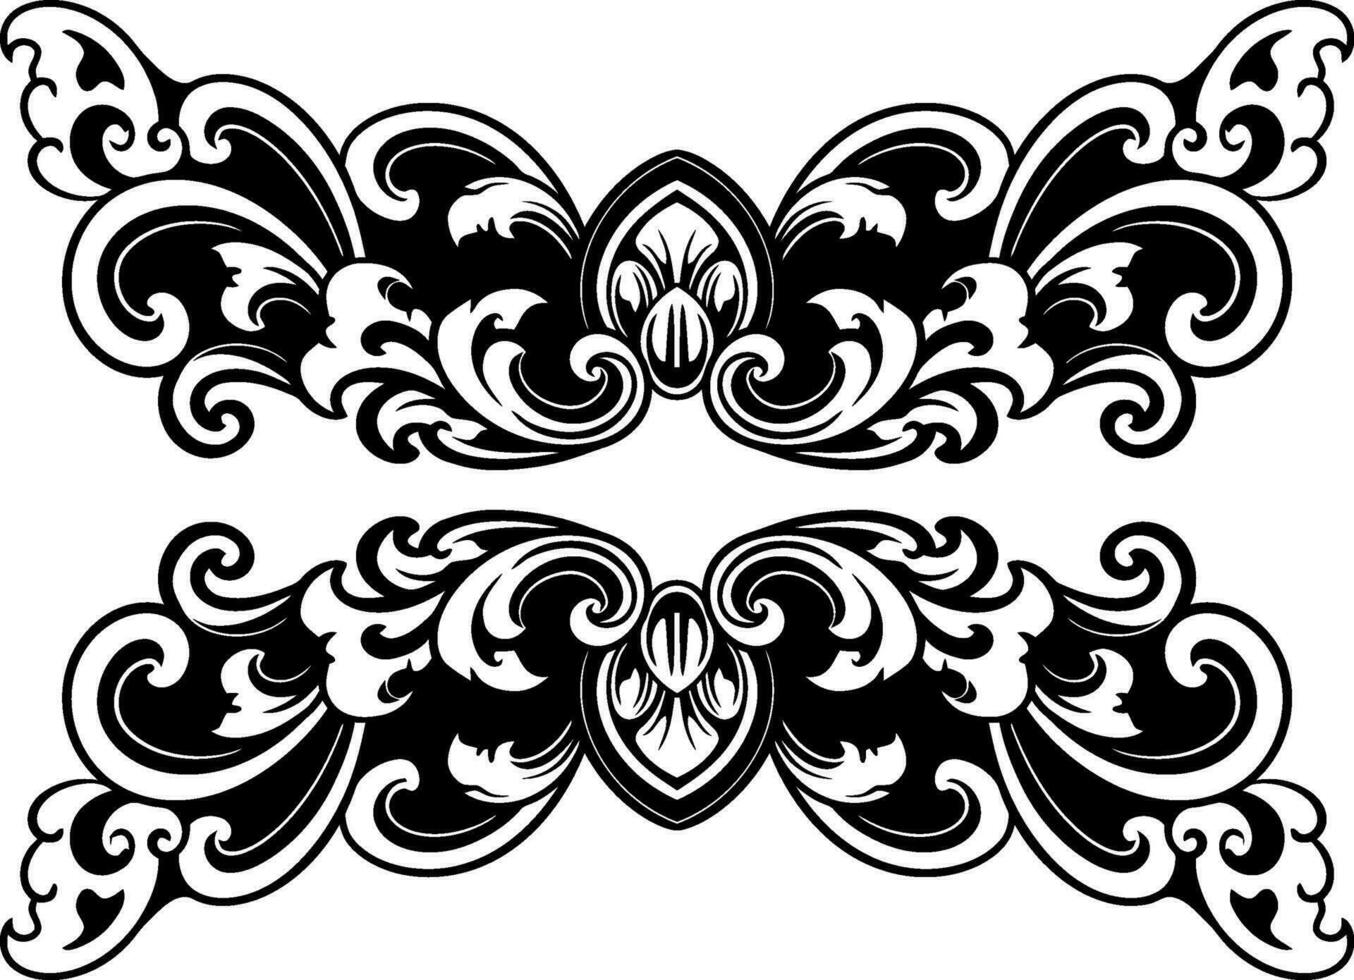 ornament pattern frame line art vector